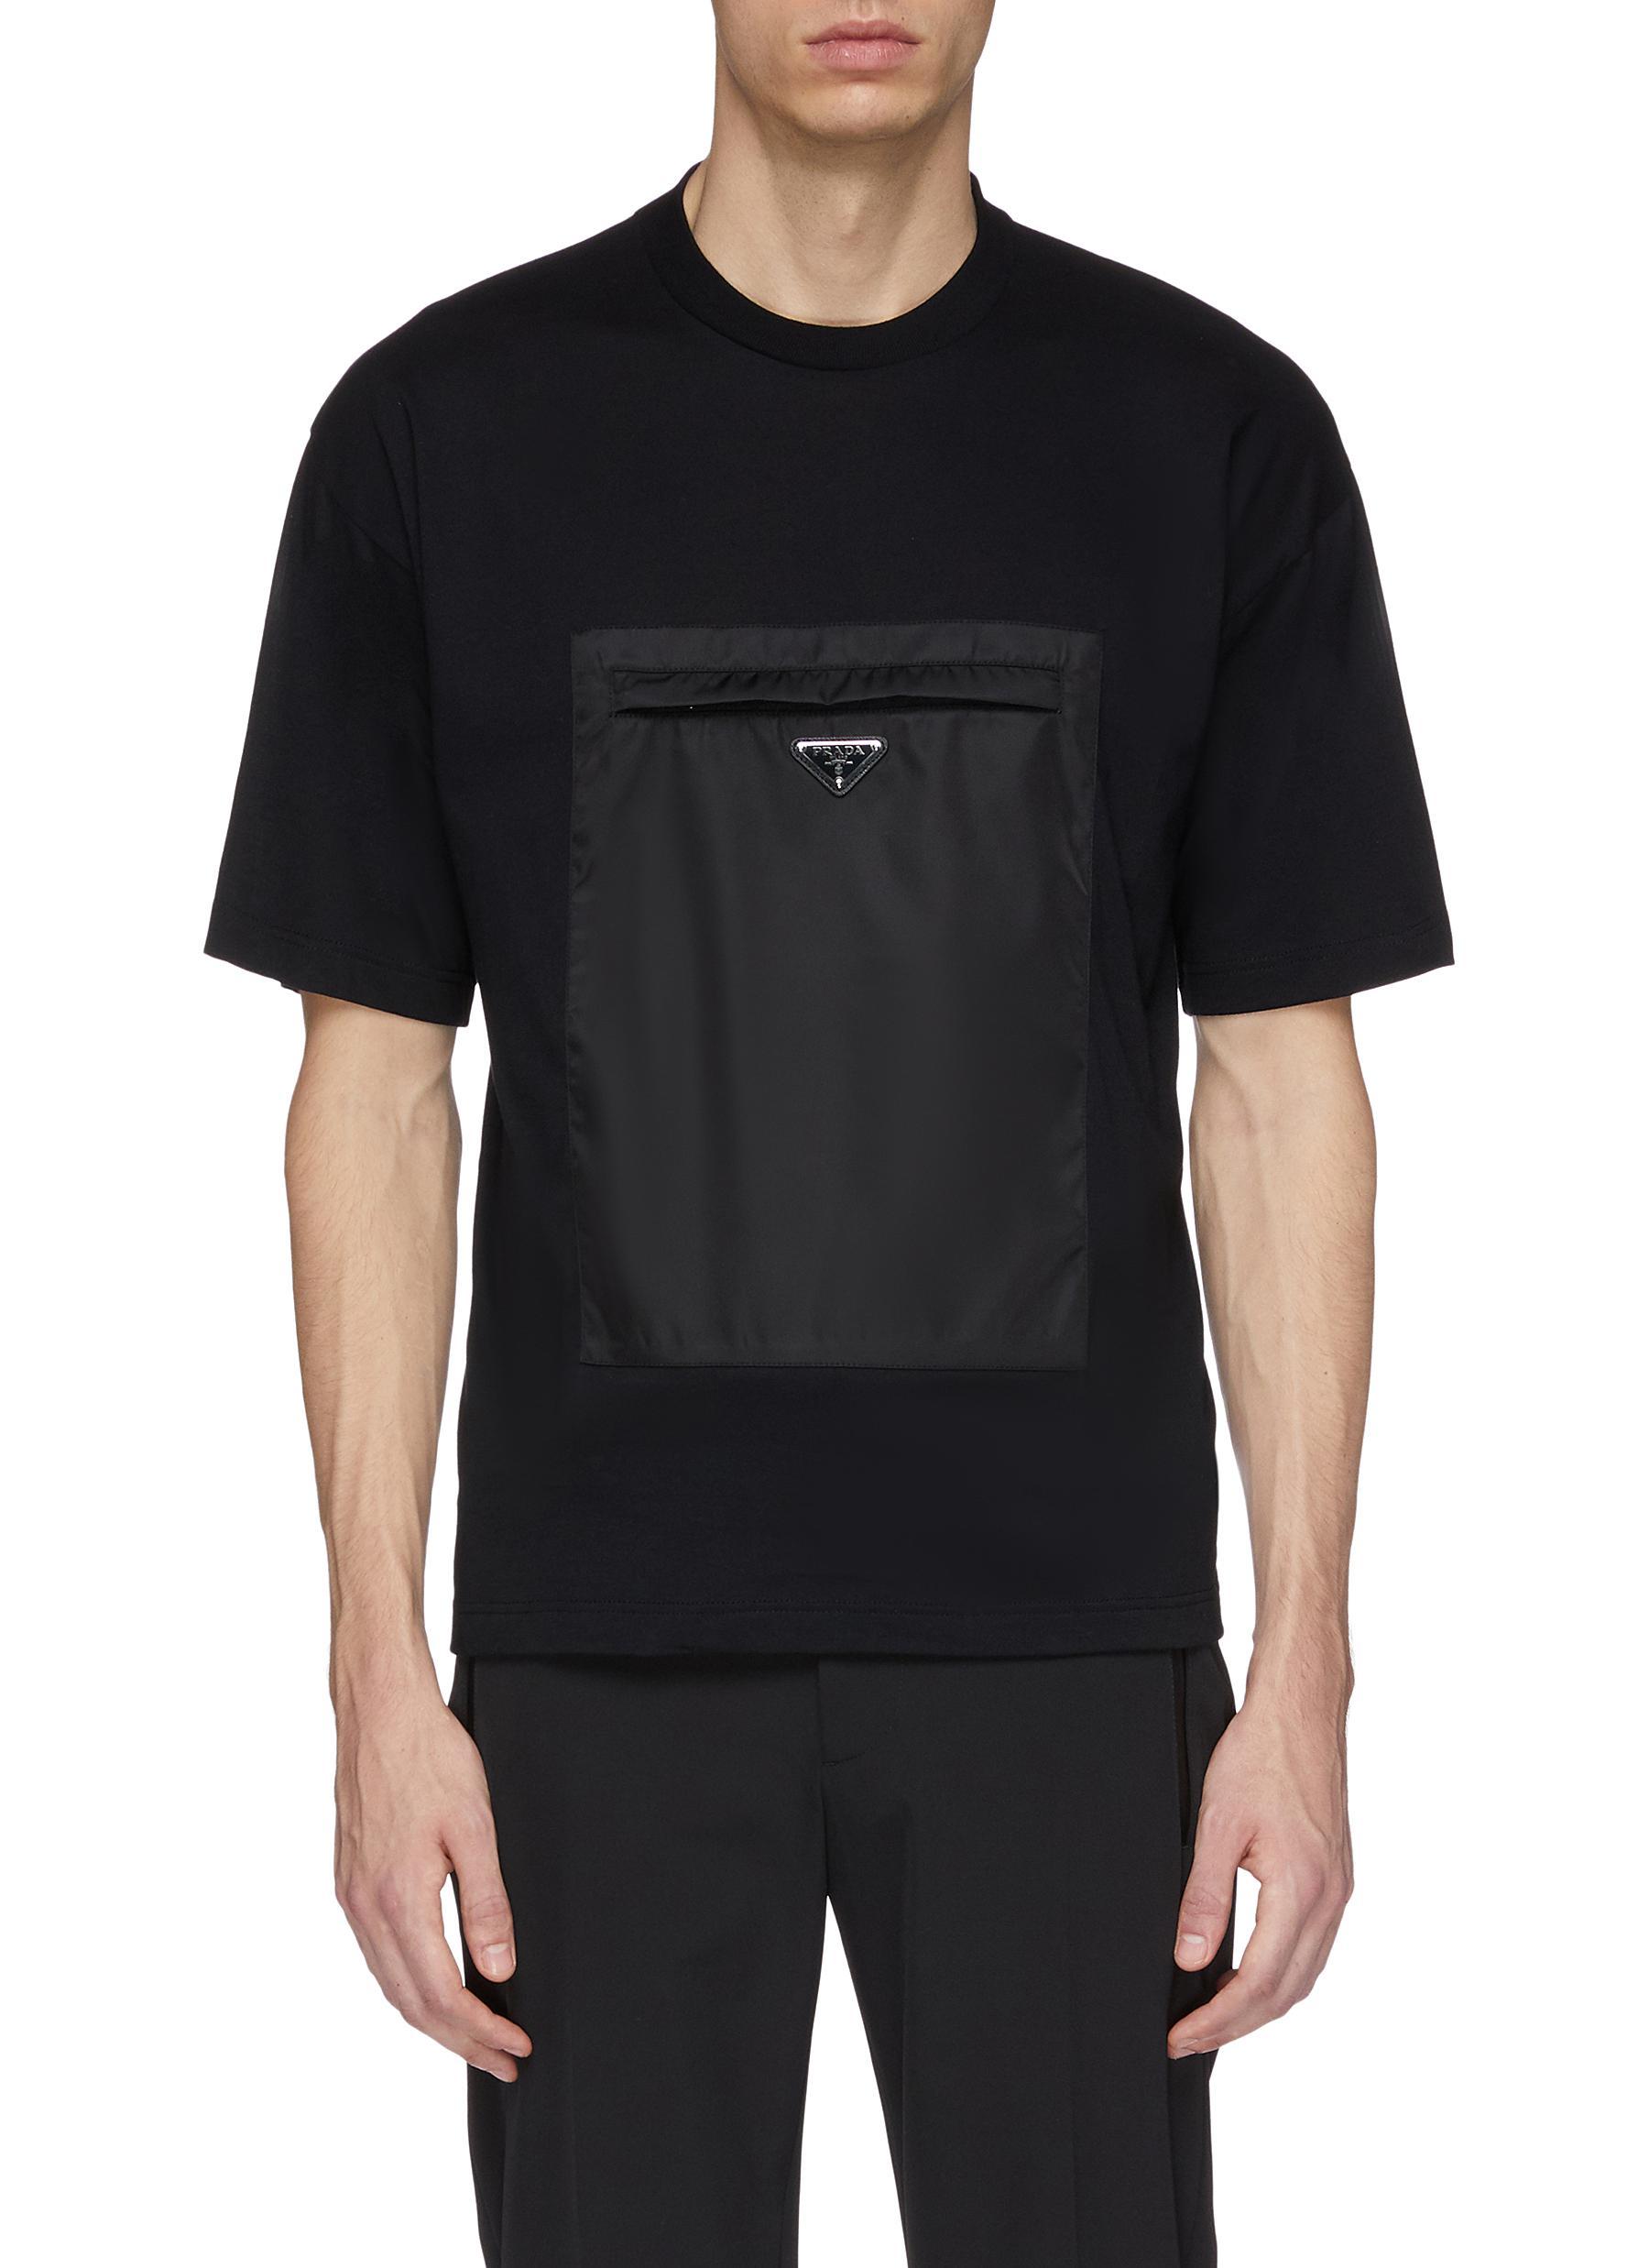 Prada Synthetic Pocket Cotton T Shirt in Black for Men - Lyst